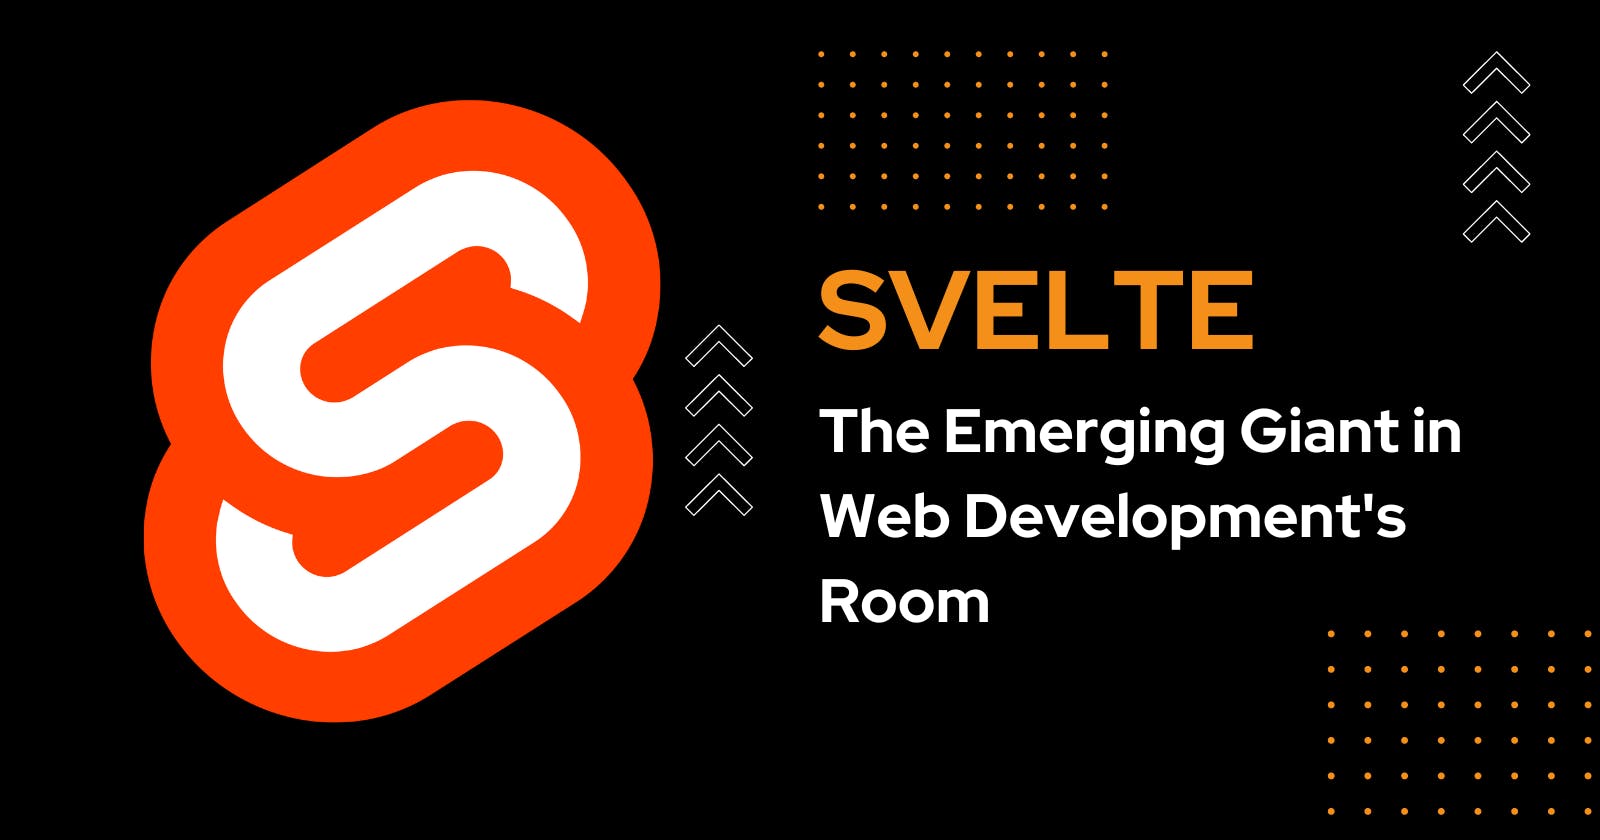 Svelte: The Emerging Giant in Web Development's Room